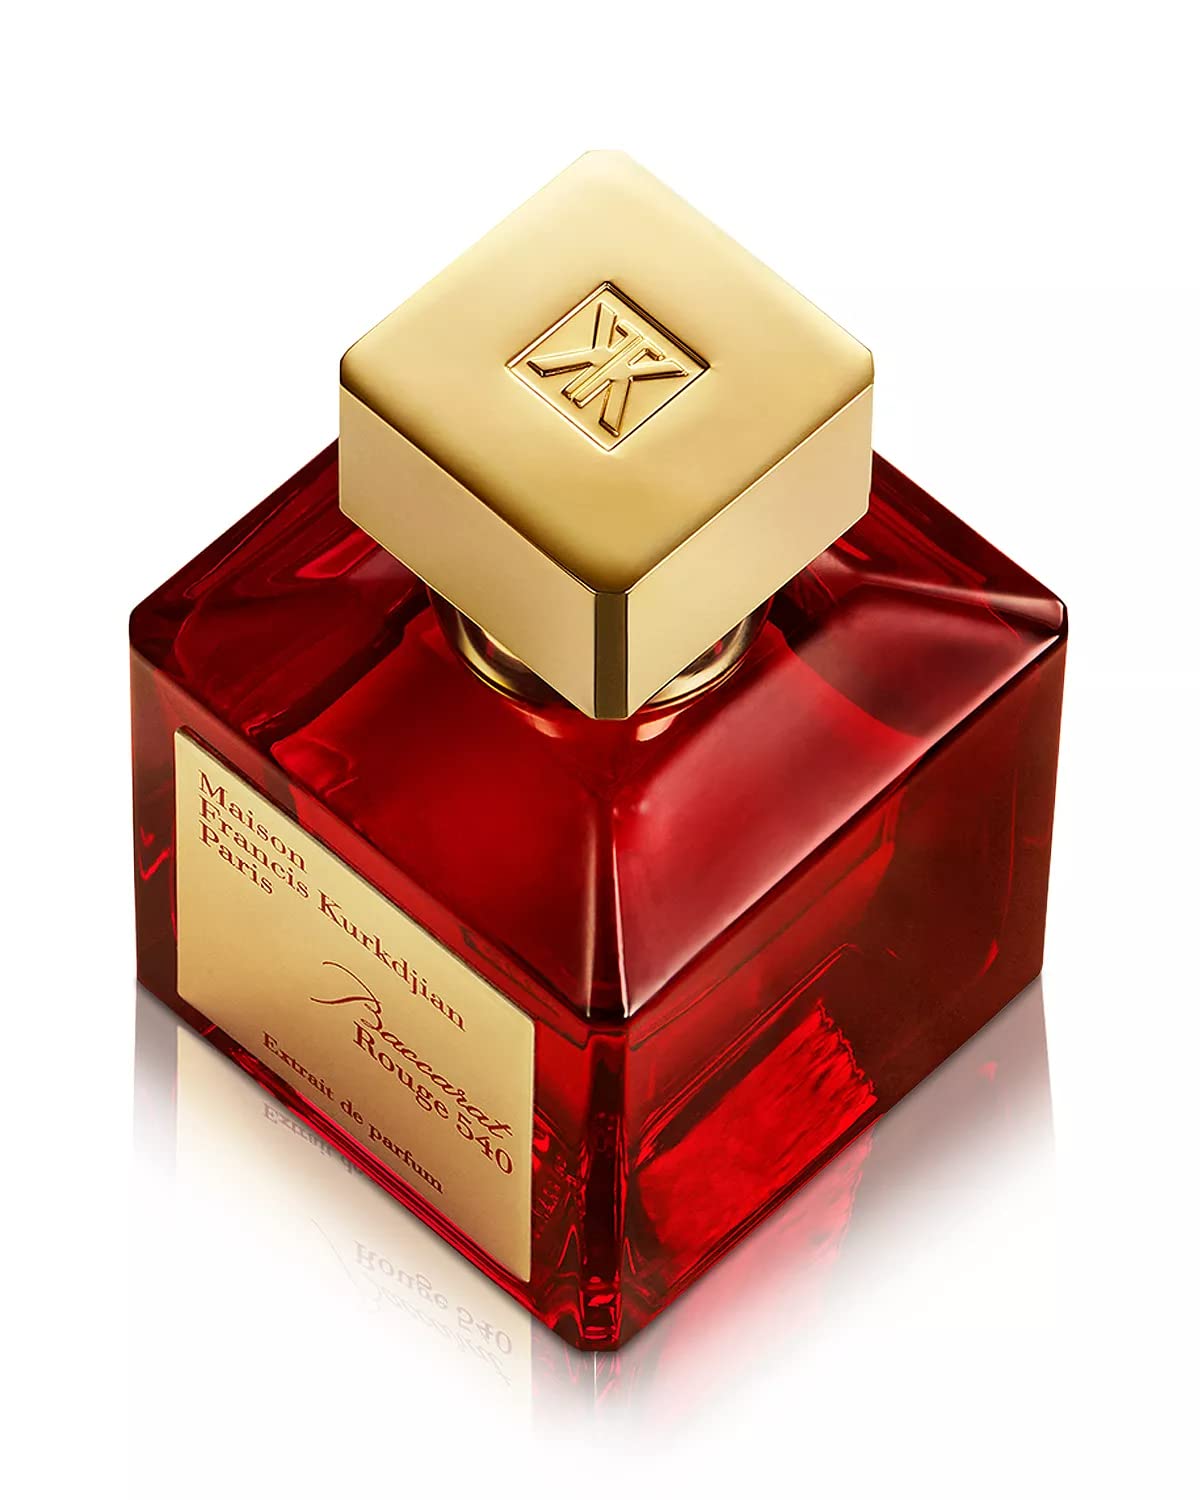 Maison Francis Kurkdjian Baccarat Rouge 540 Pure Perfume, 2.3 Fl Oz (Pack of 1)